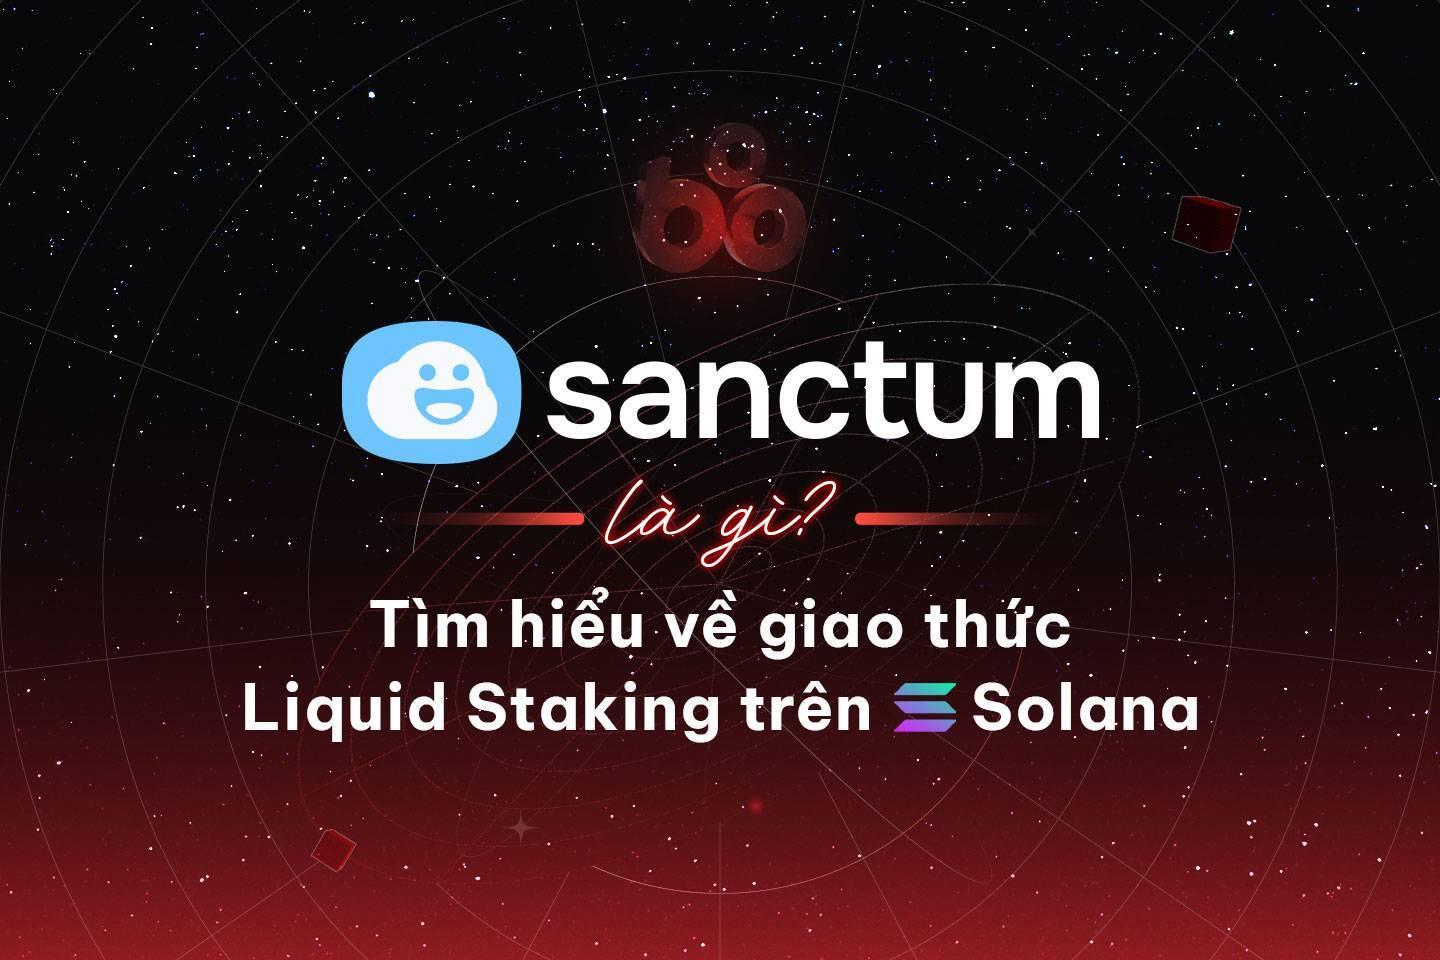 sanctum-la-gi-tim-hieu-ve-giao-thuc-liquid-staking-tren-solana